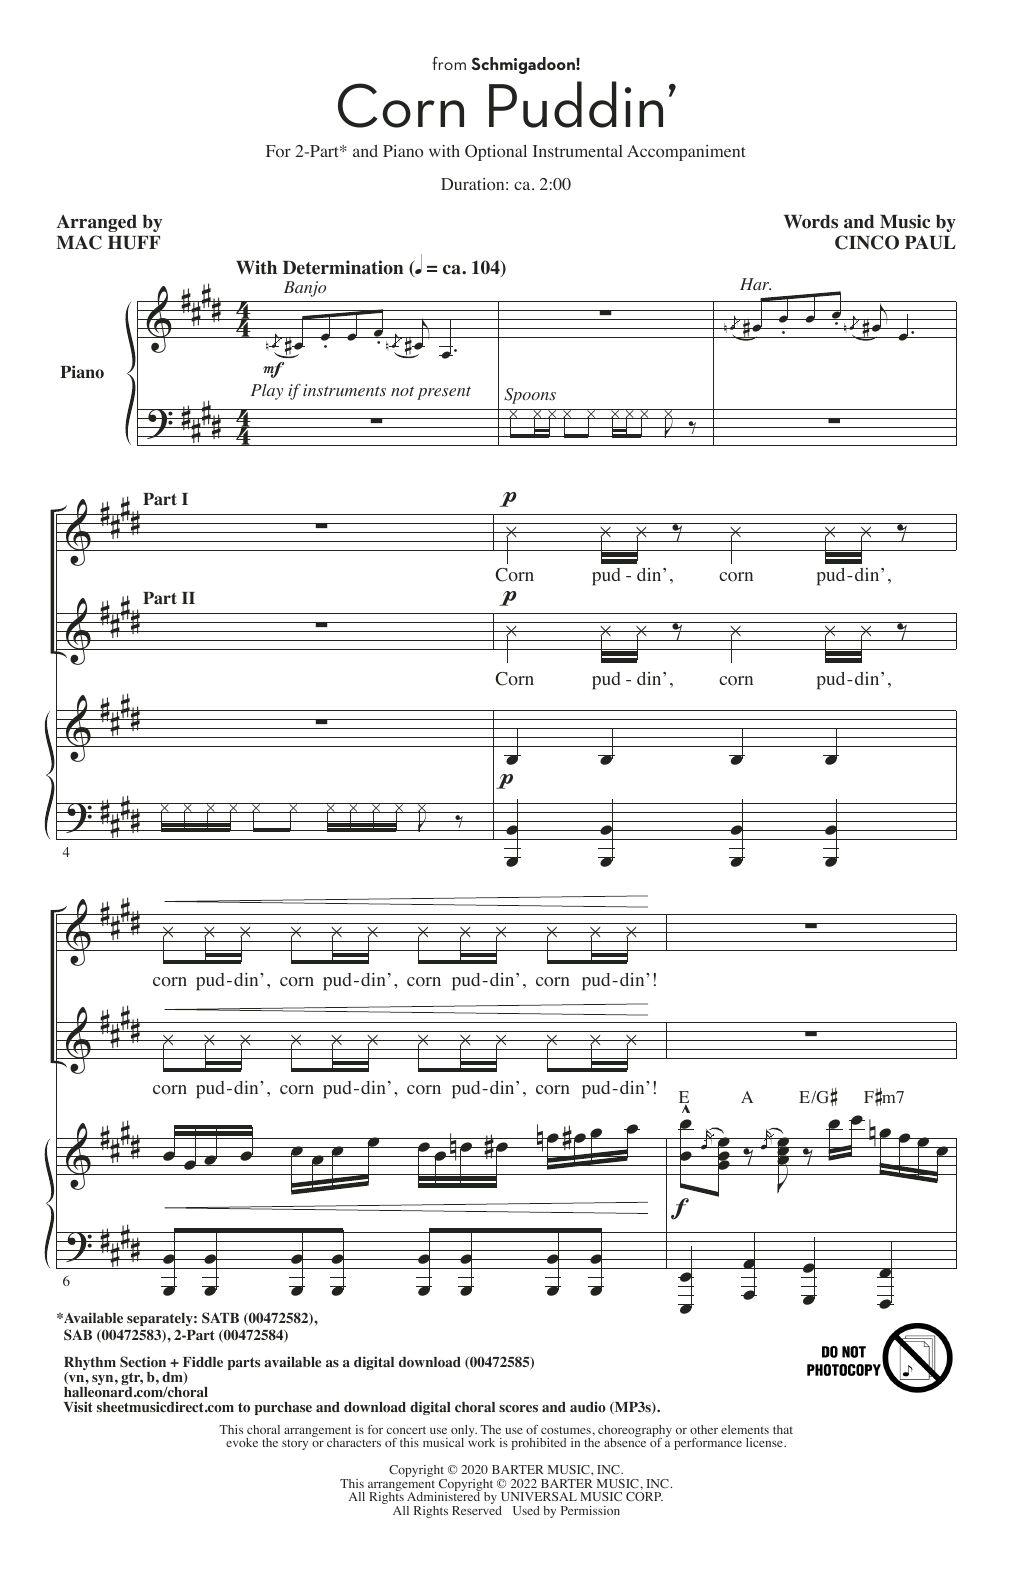 Cinco Paul Corn Puddin' (from Schmigadoon!) (arr. Mac Huff) sheet music notes and chords arranged for SATB Choir